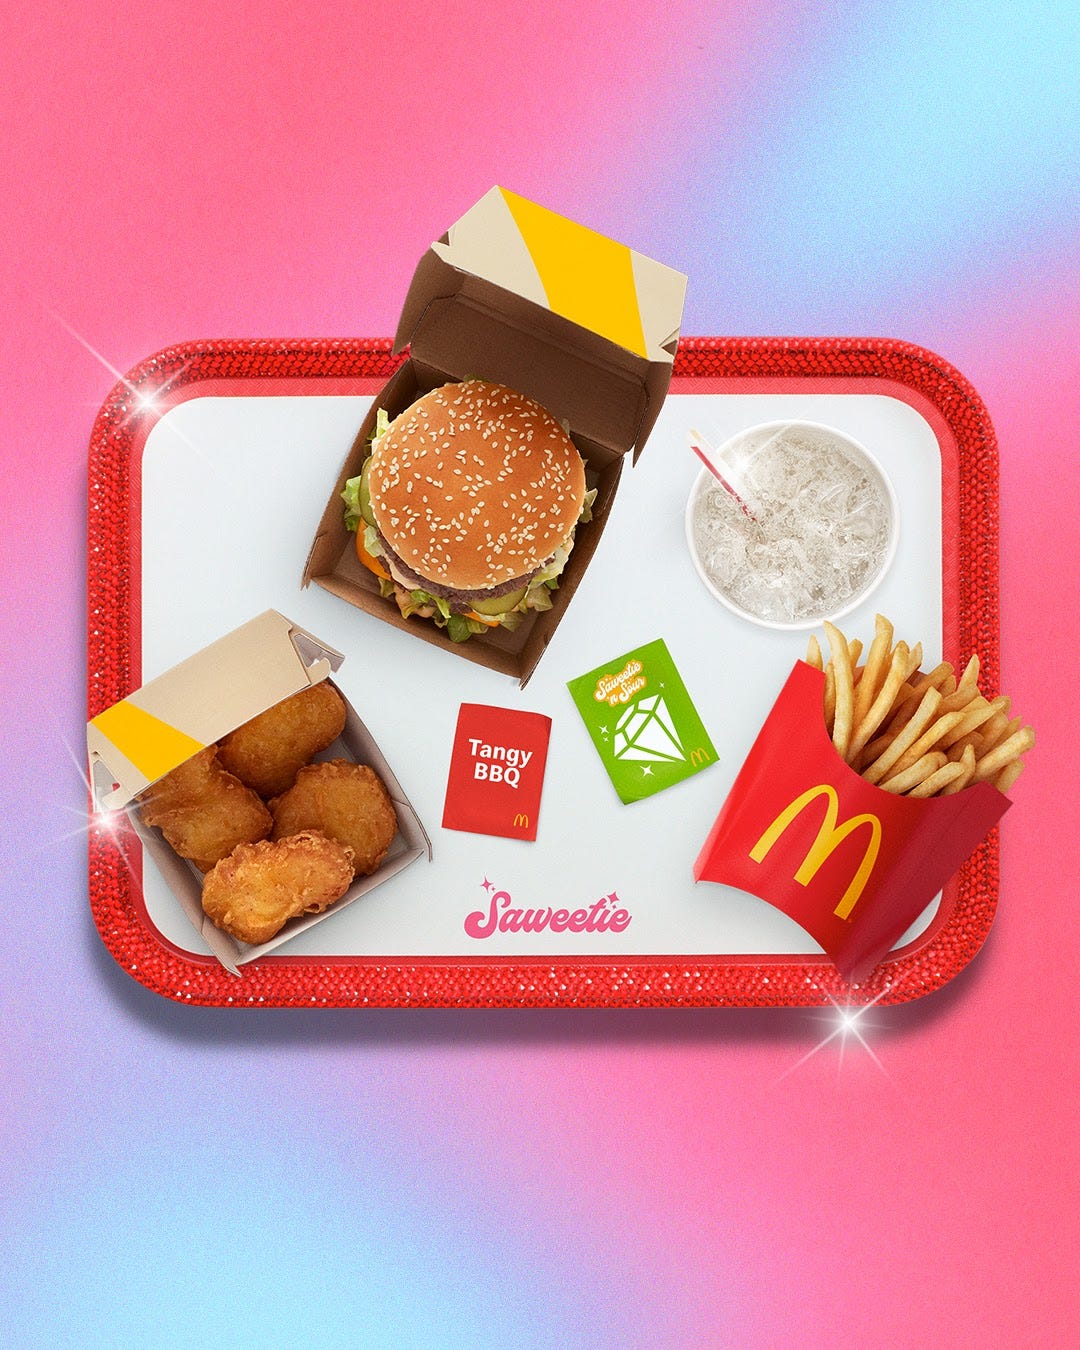 McDonald's Saweetie Meal: New celebrity menu item arrives Aug. 9